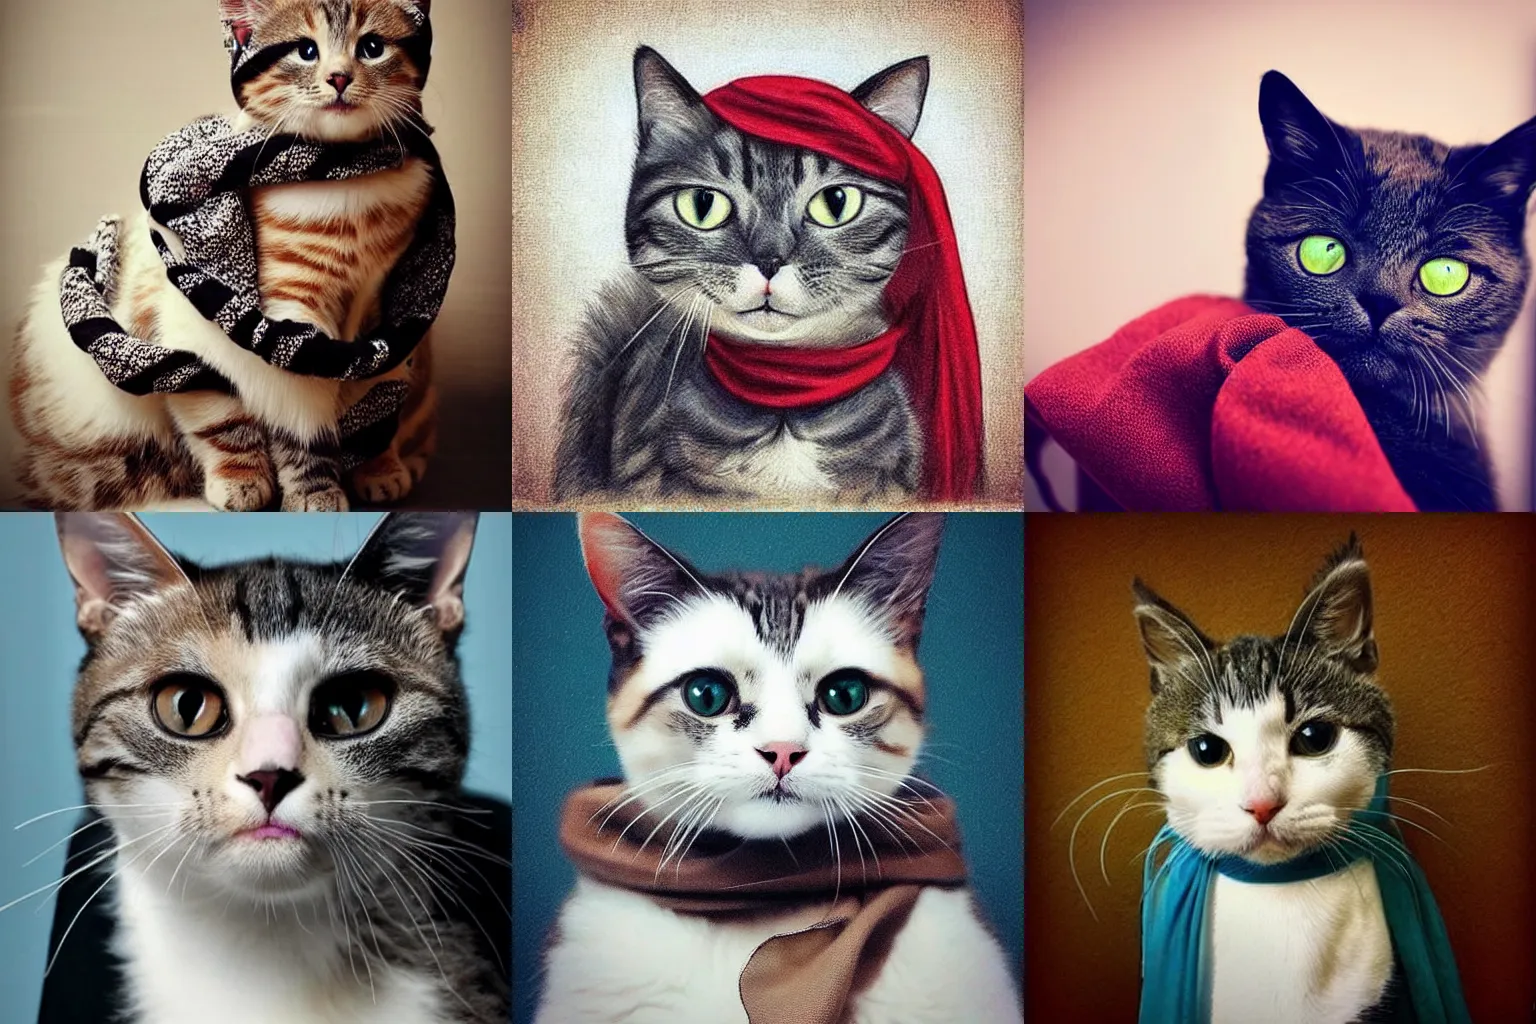 Prompt: cute cat wearing hijab, beautiful, portrait